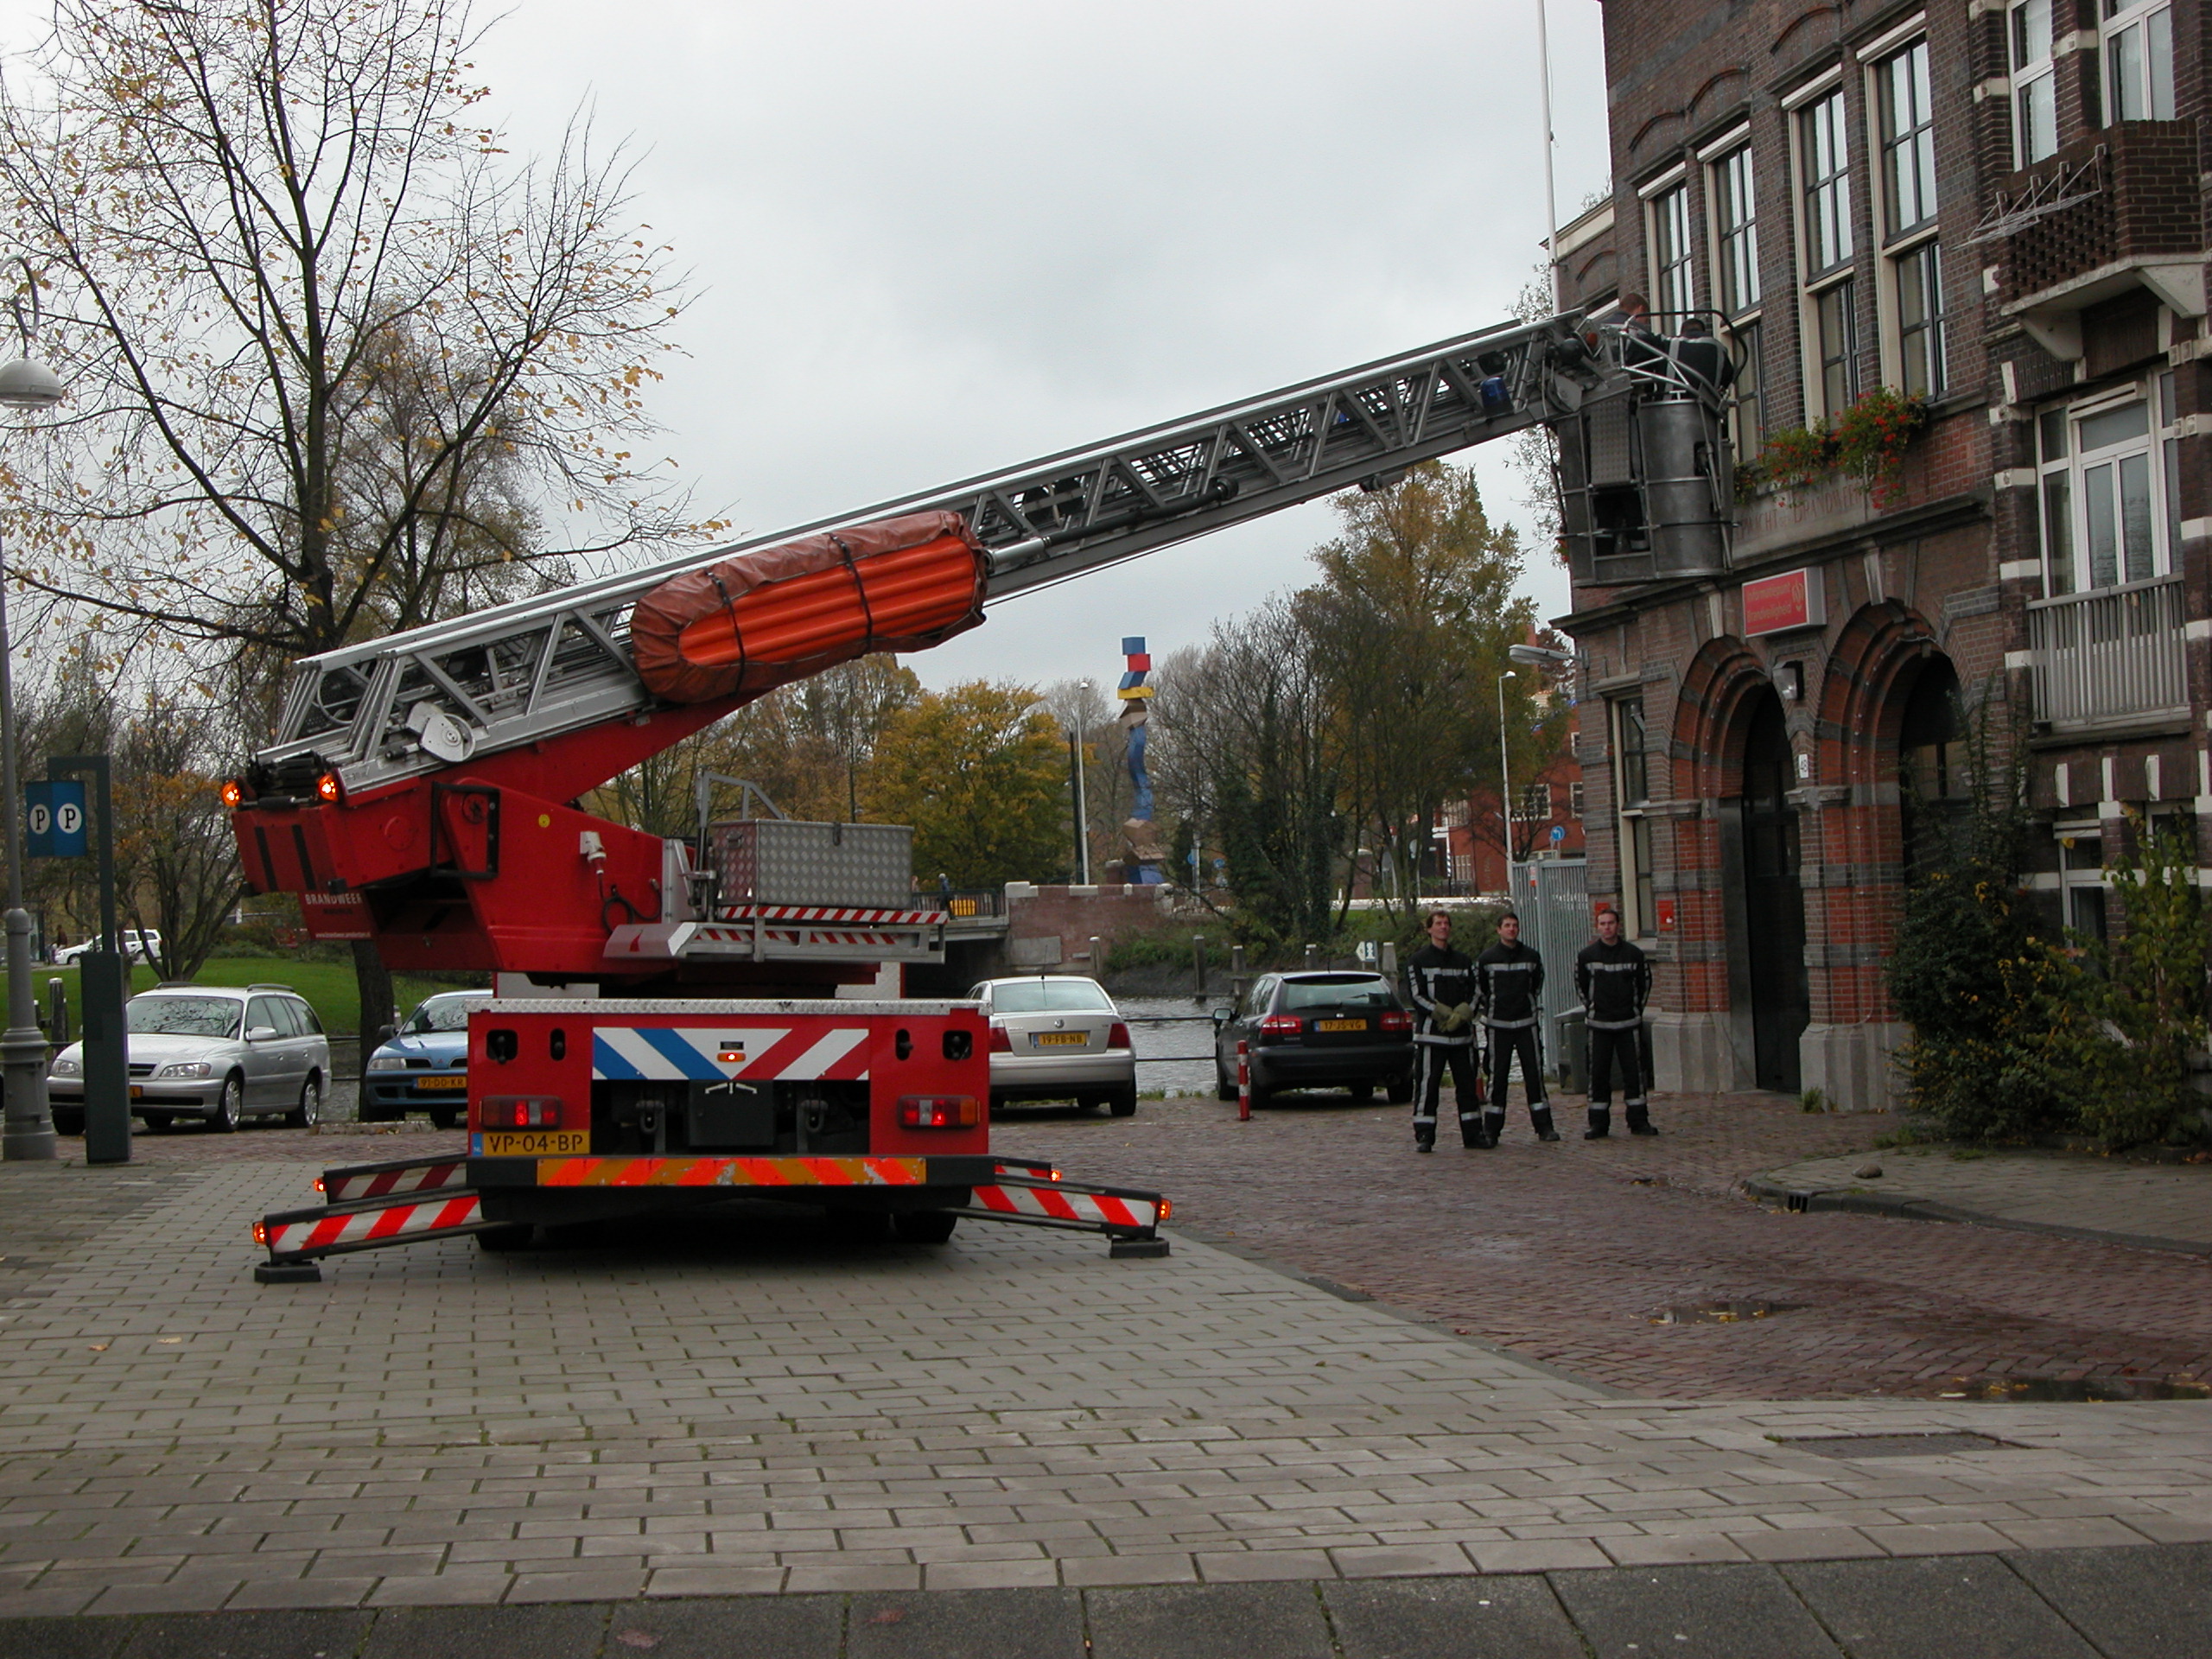 firemen crane red ladder heavy basket vehicle car truck firetruck